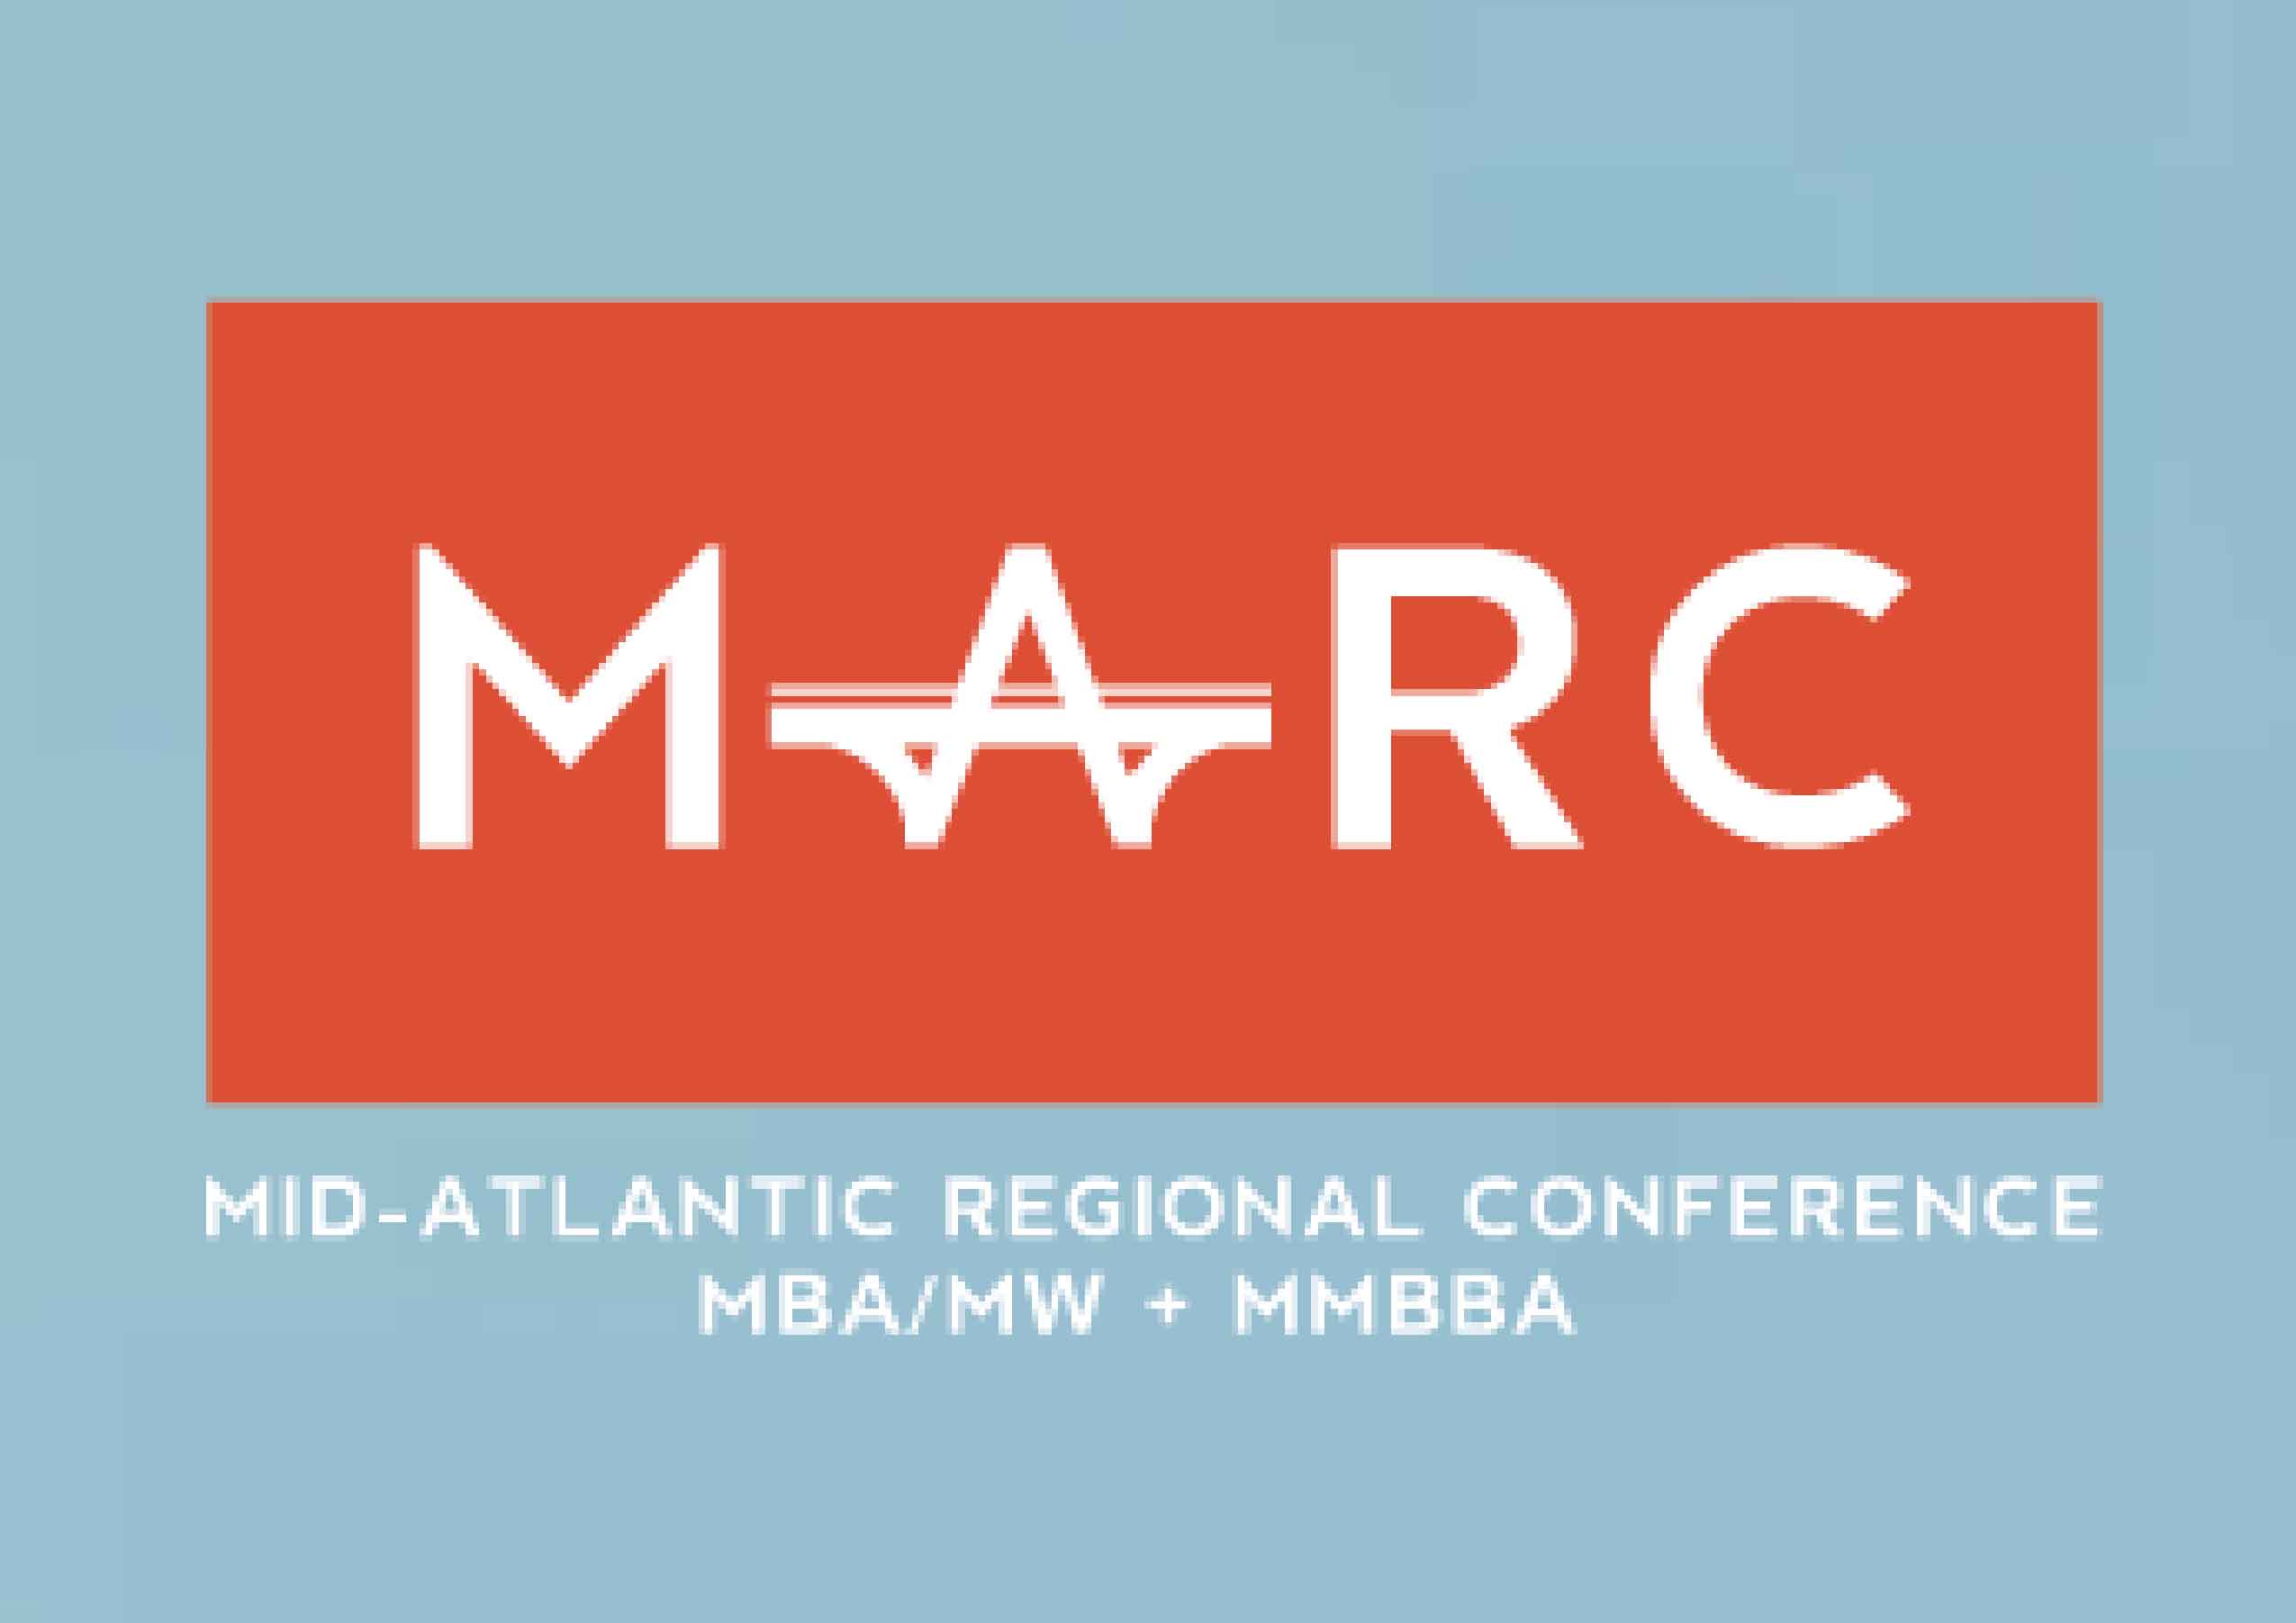 Mid-Atlantic Regional Conference